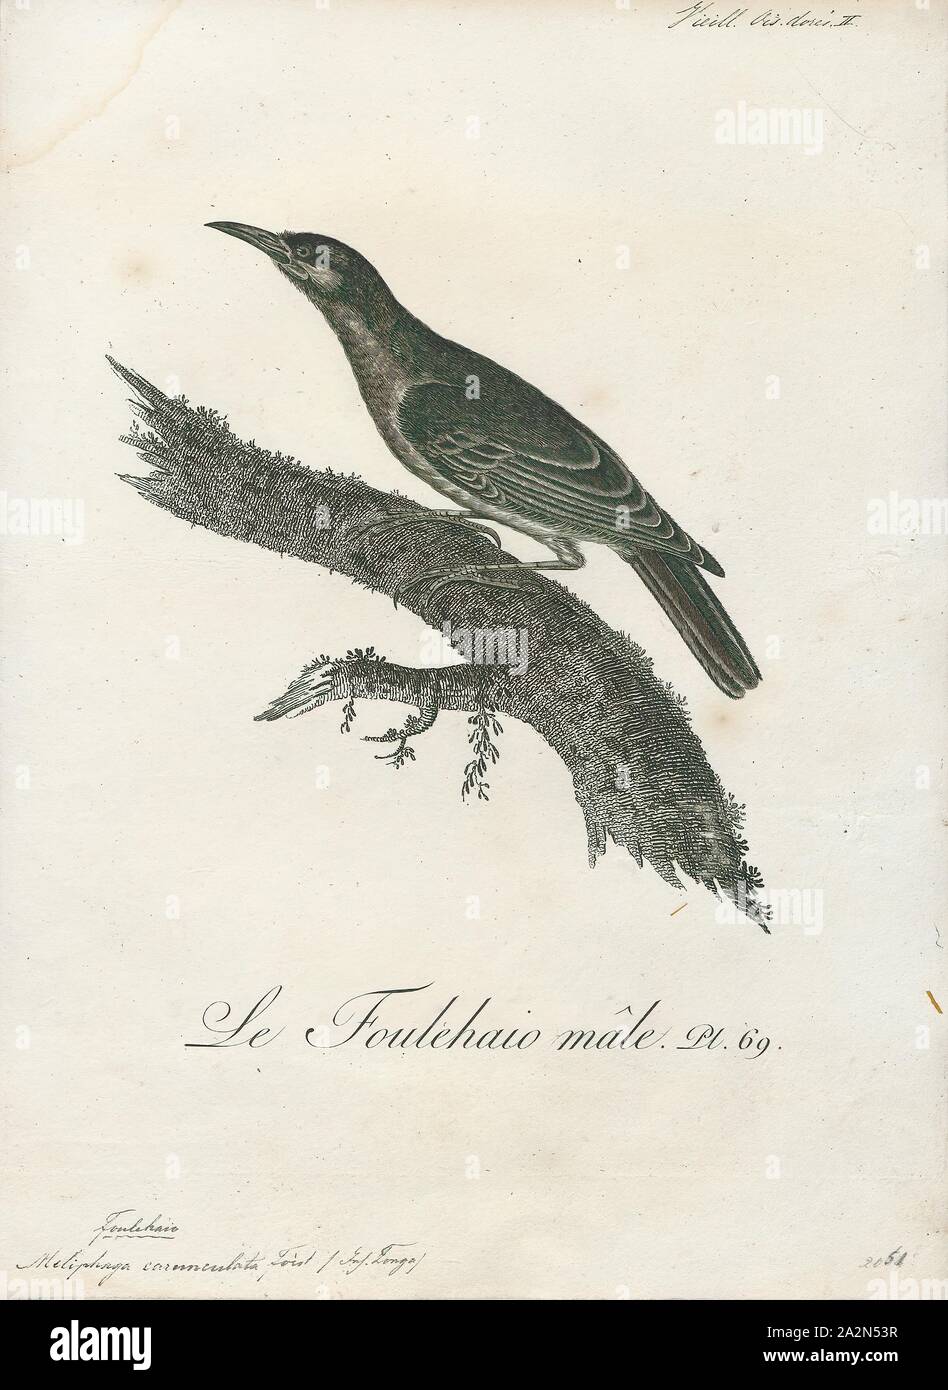 Meliphaga carunculata, Print, Meliphaga is a genus of bird in the family Meliphagidae., 1802 Stock Photo